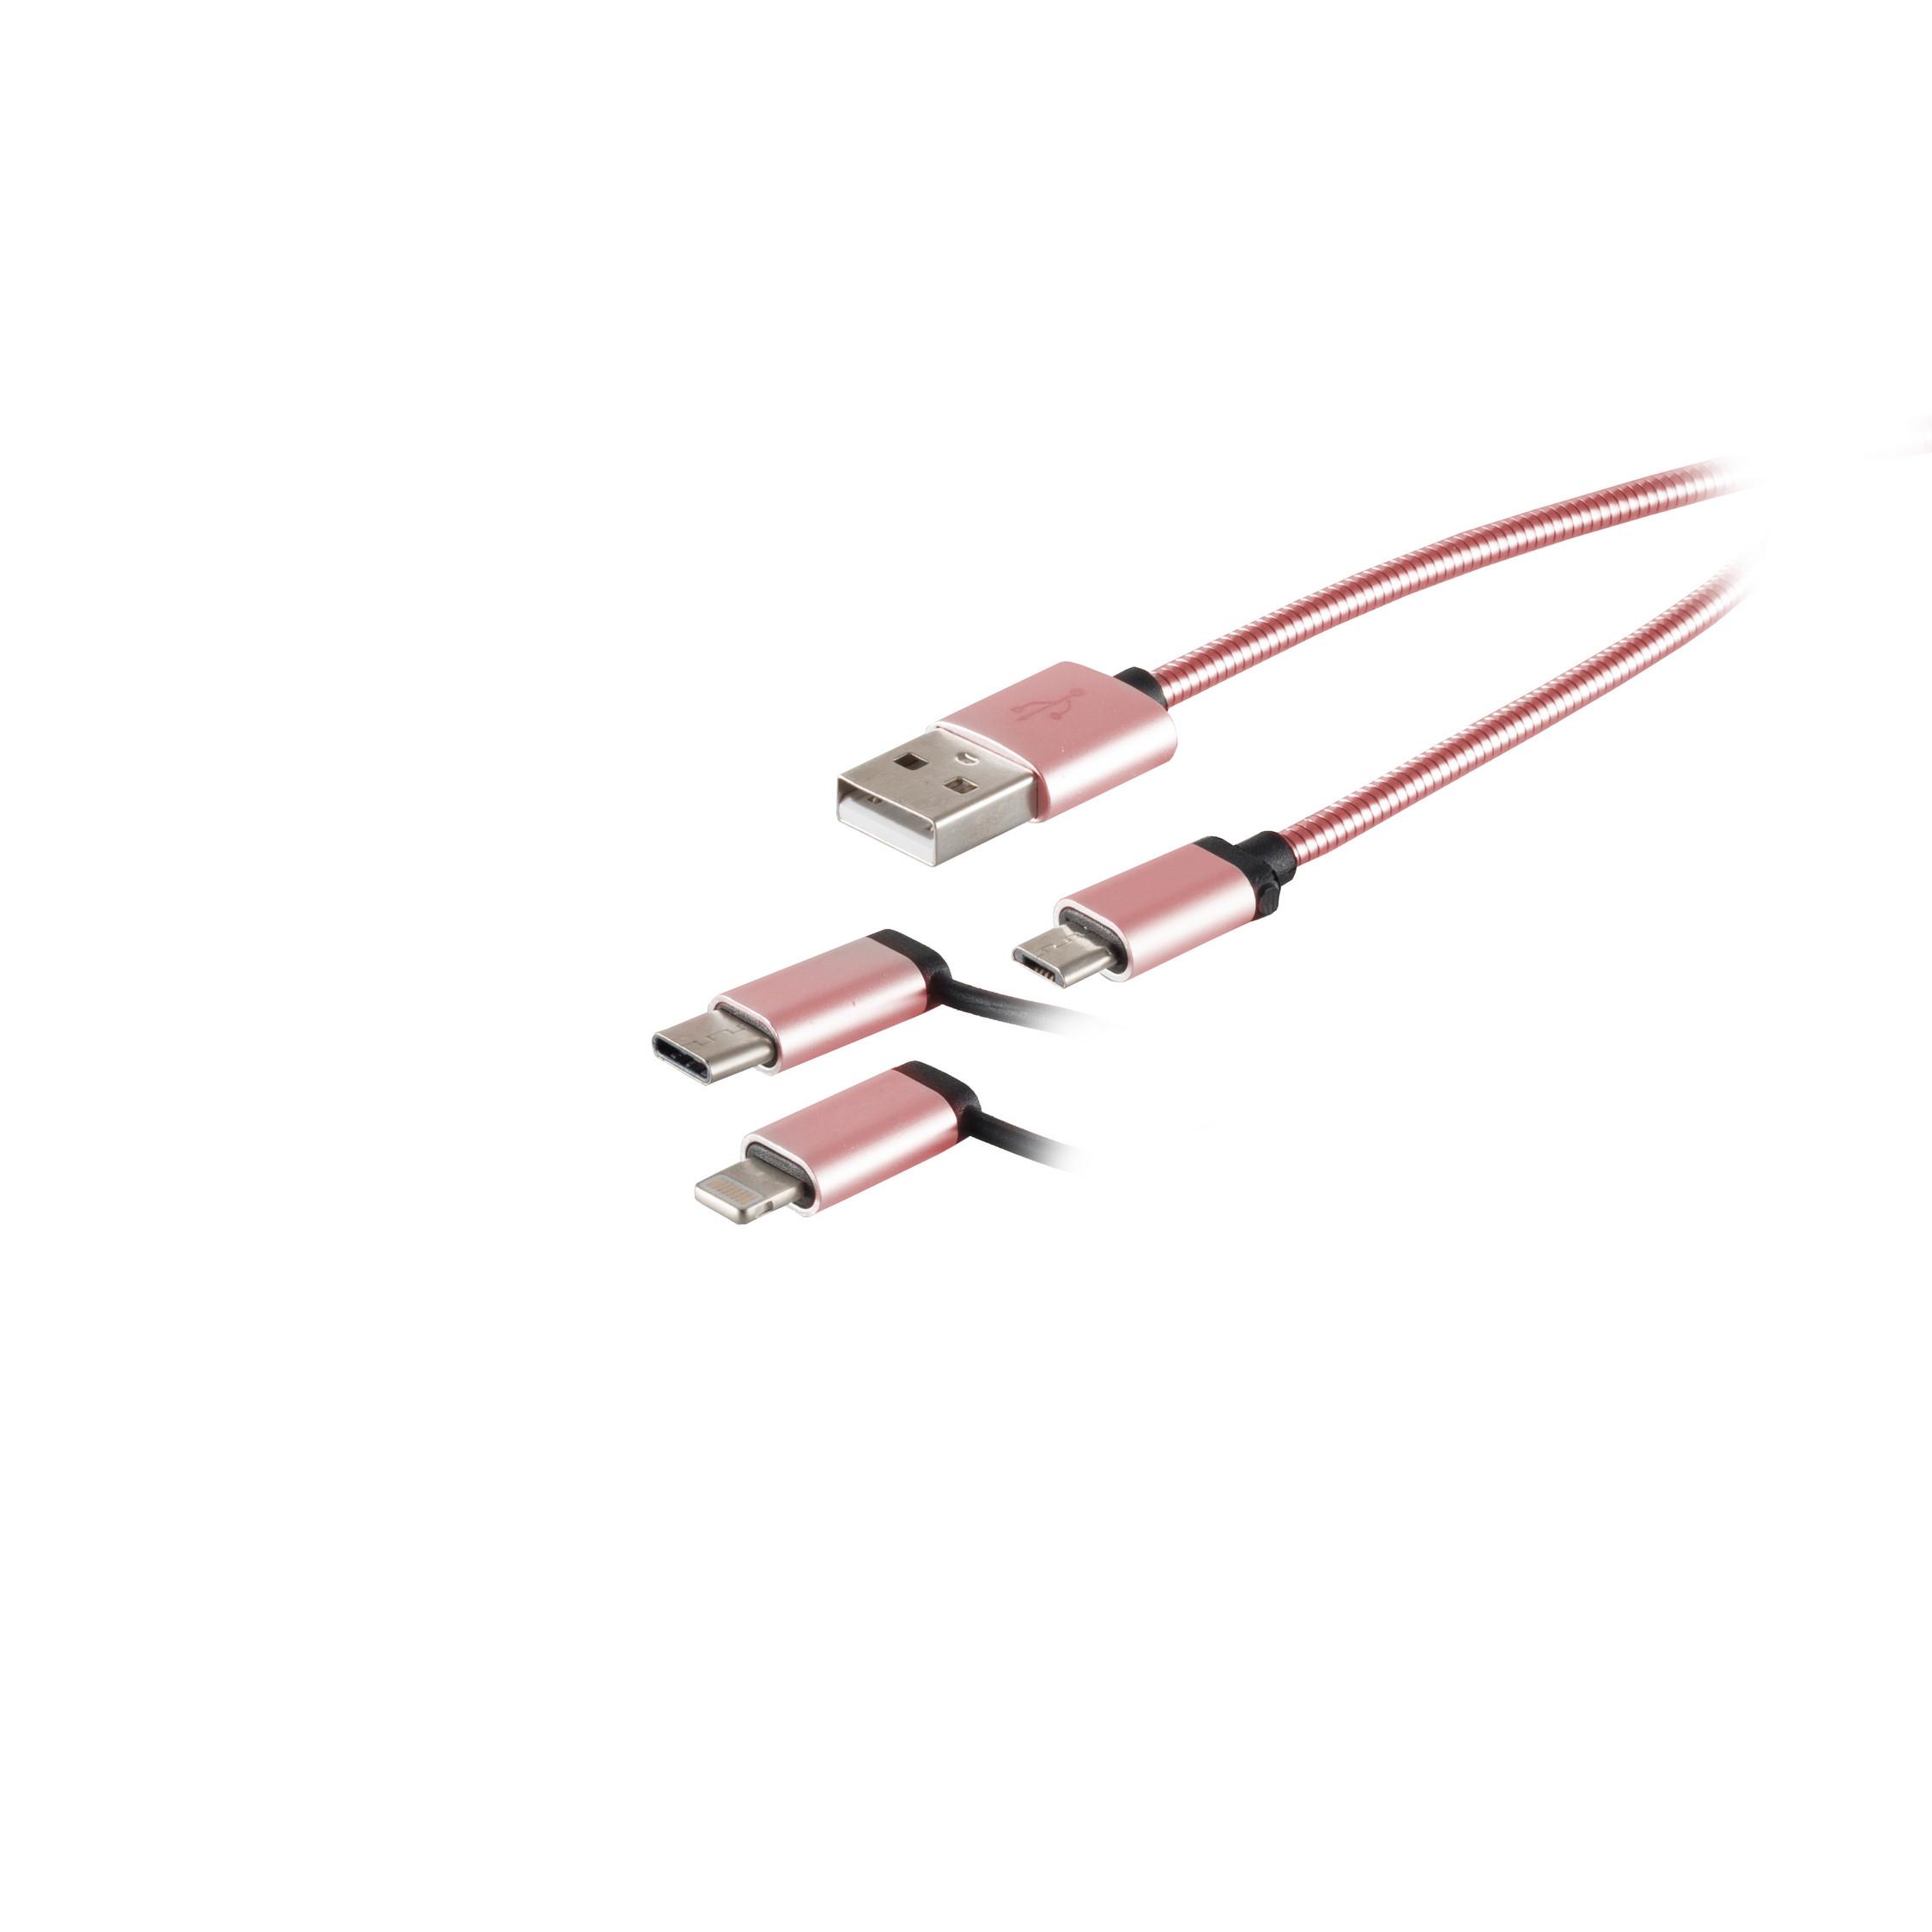 S/CONN MAXIMUM CONNECTIVITY MicroB/ TypC/ Kabel 3in1 USB Ladekabel 1m 8-pin Stecker